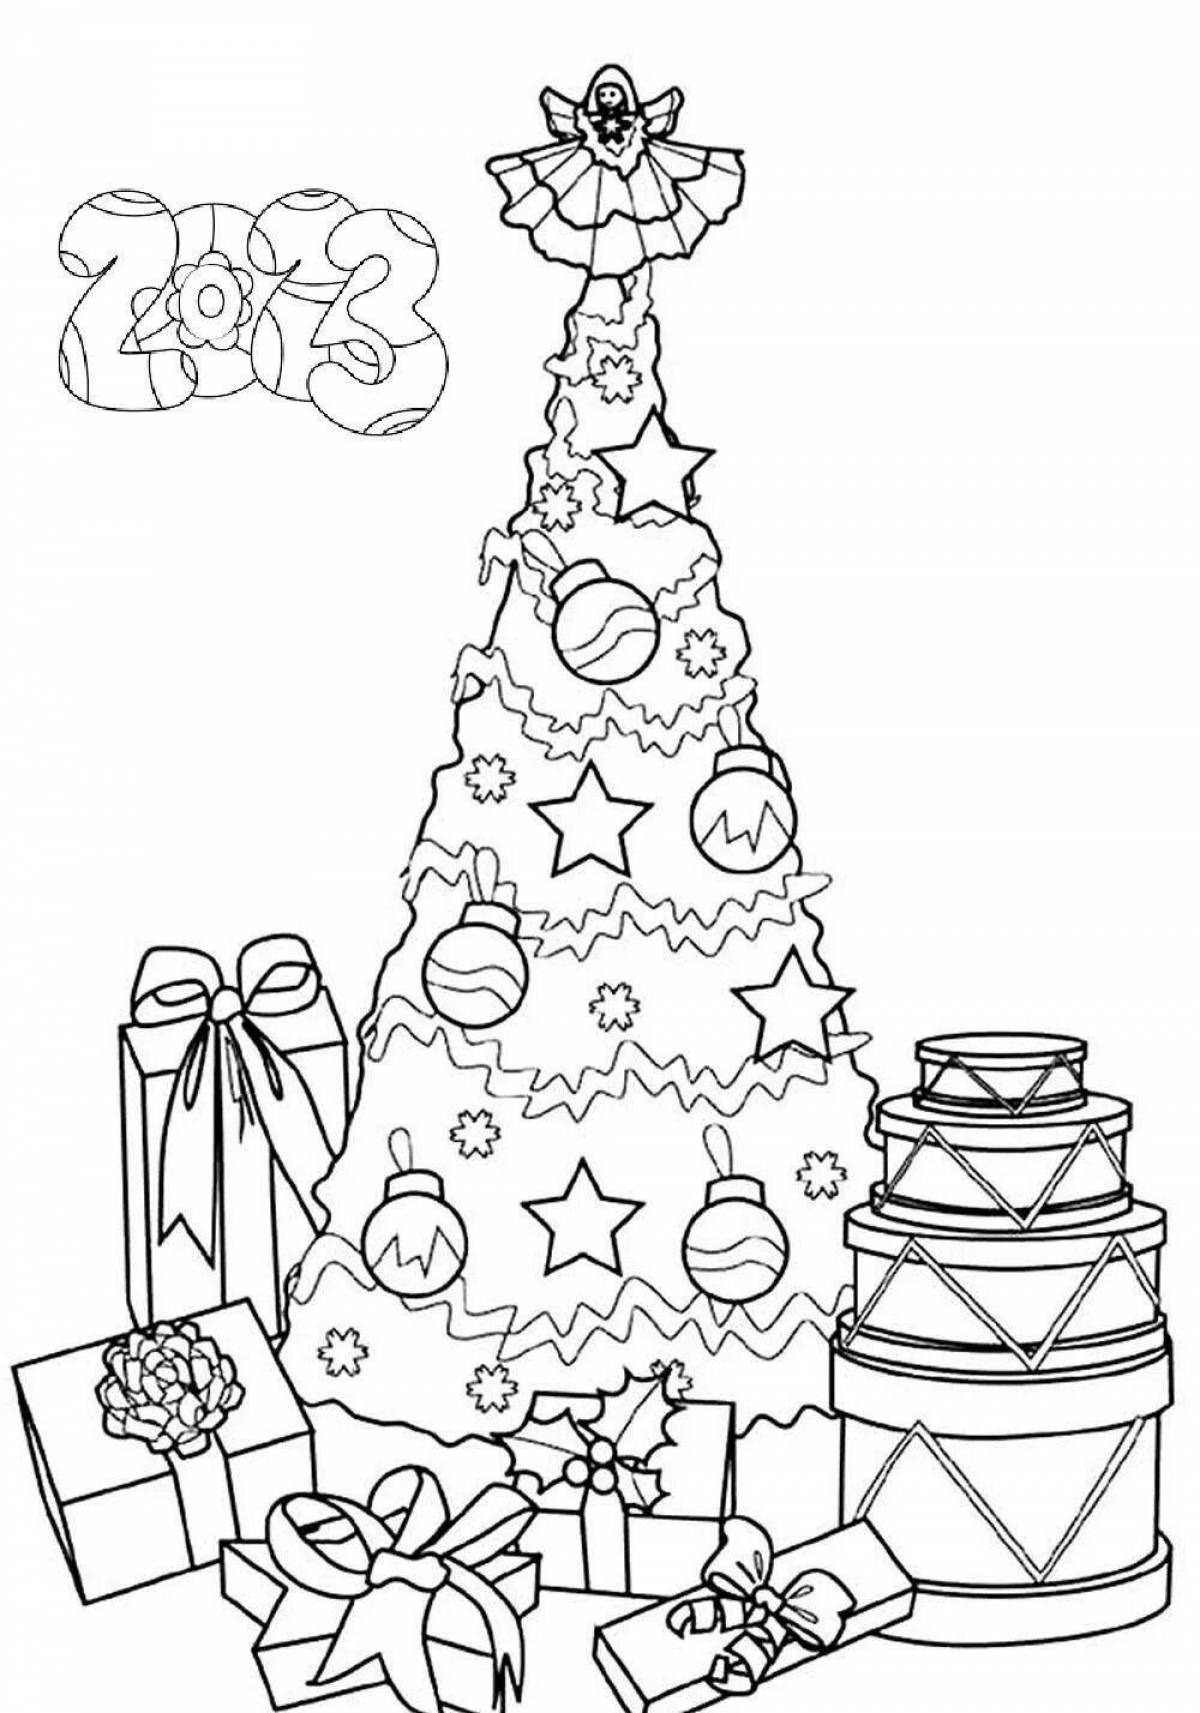 Adorable Christmas tree coloring book